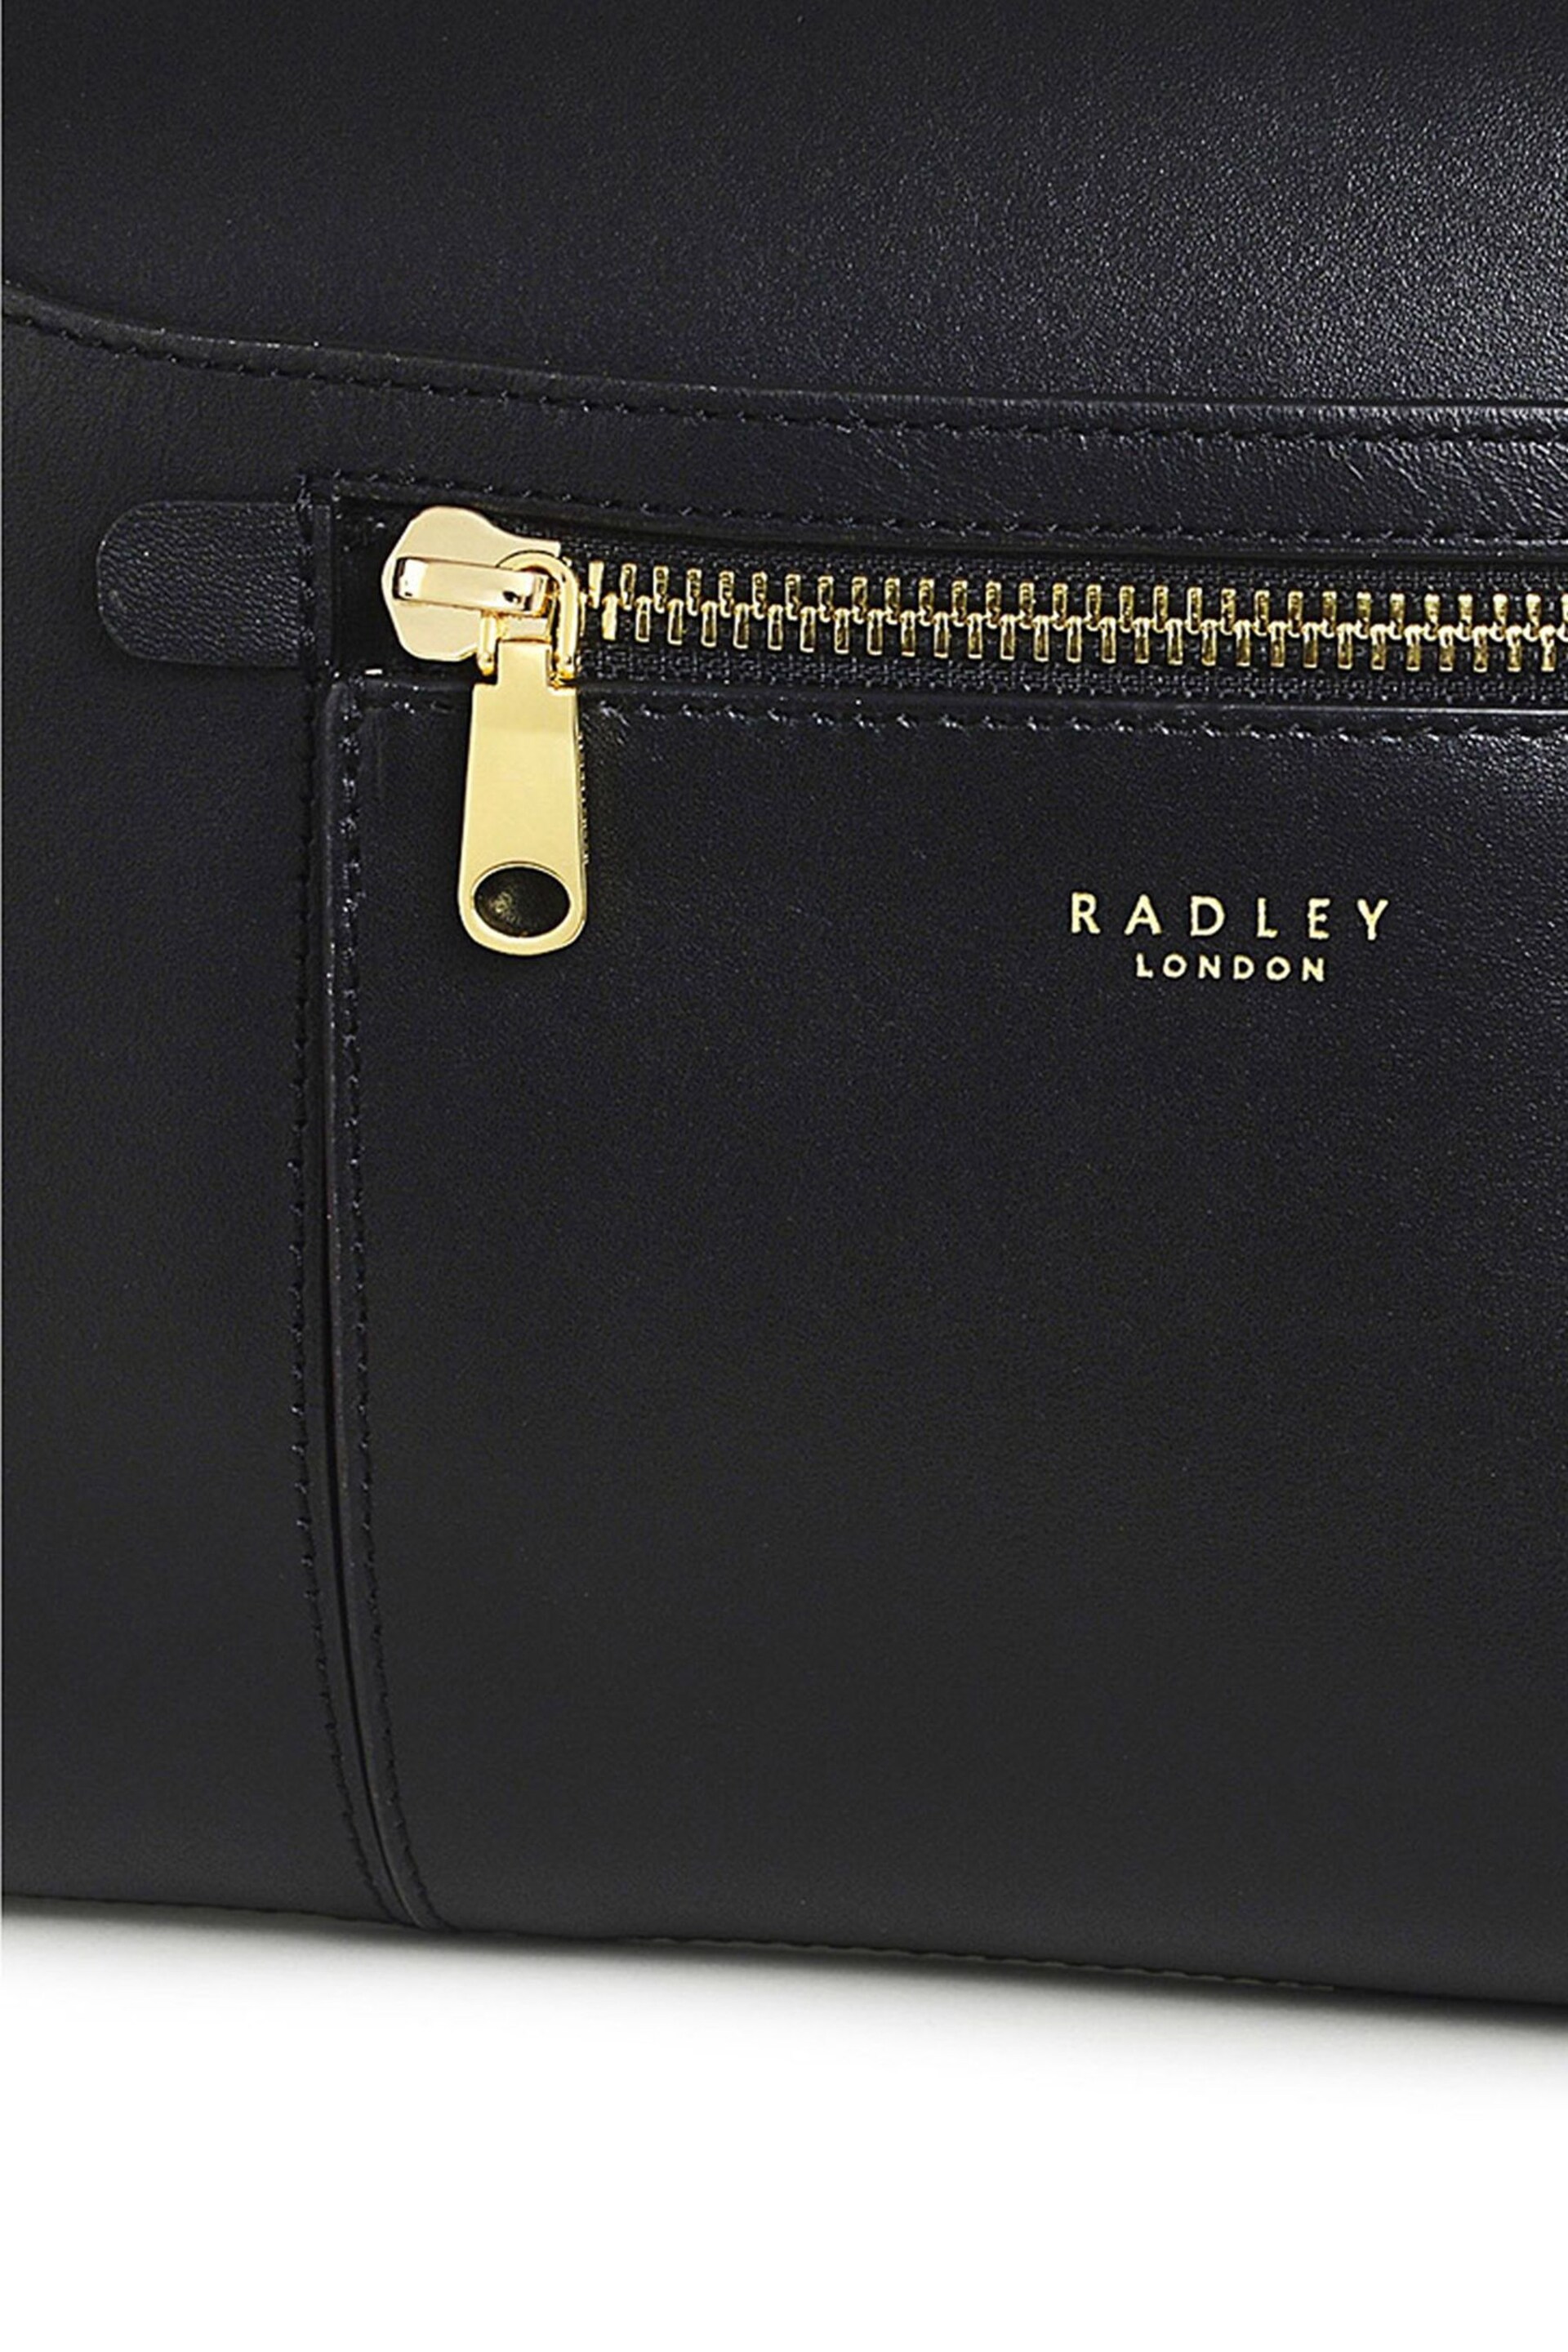 Radley London Small Pockets Icon Zip-Top Cross-Body Black Bag - Image 5 of 5